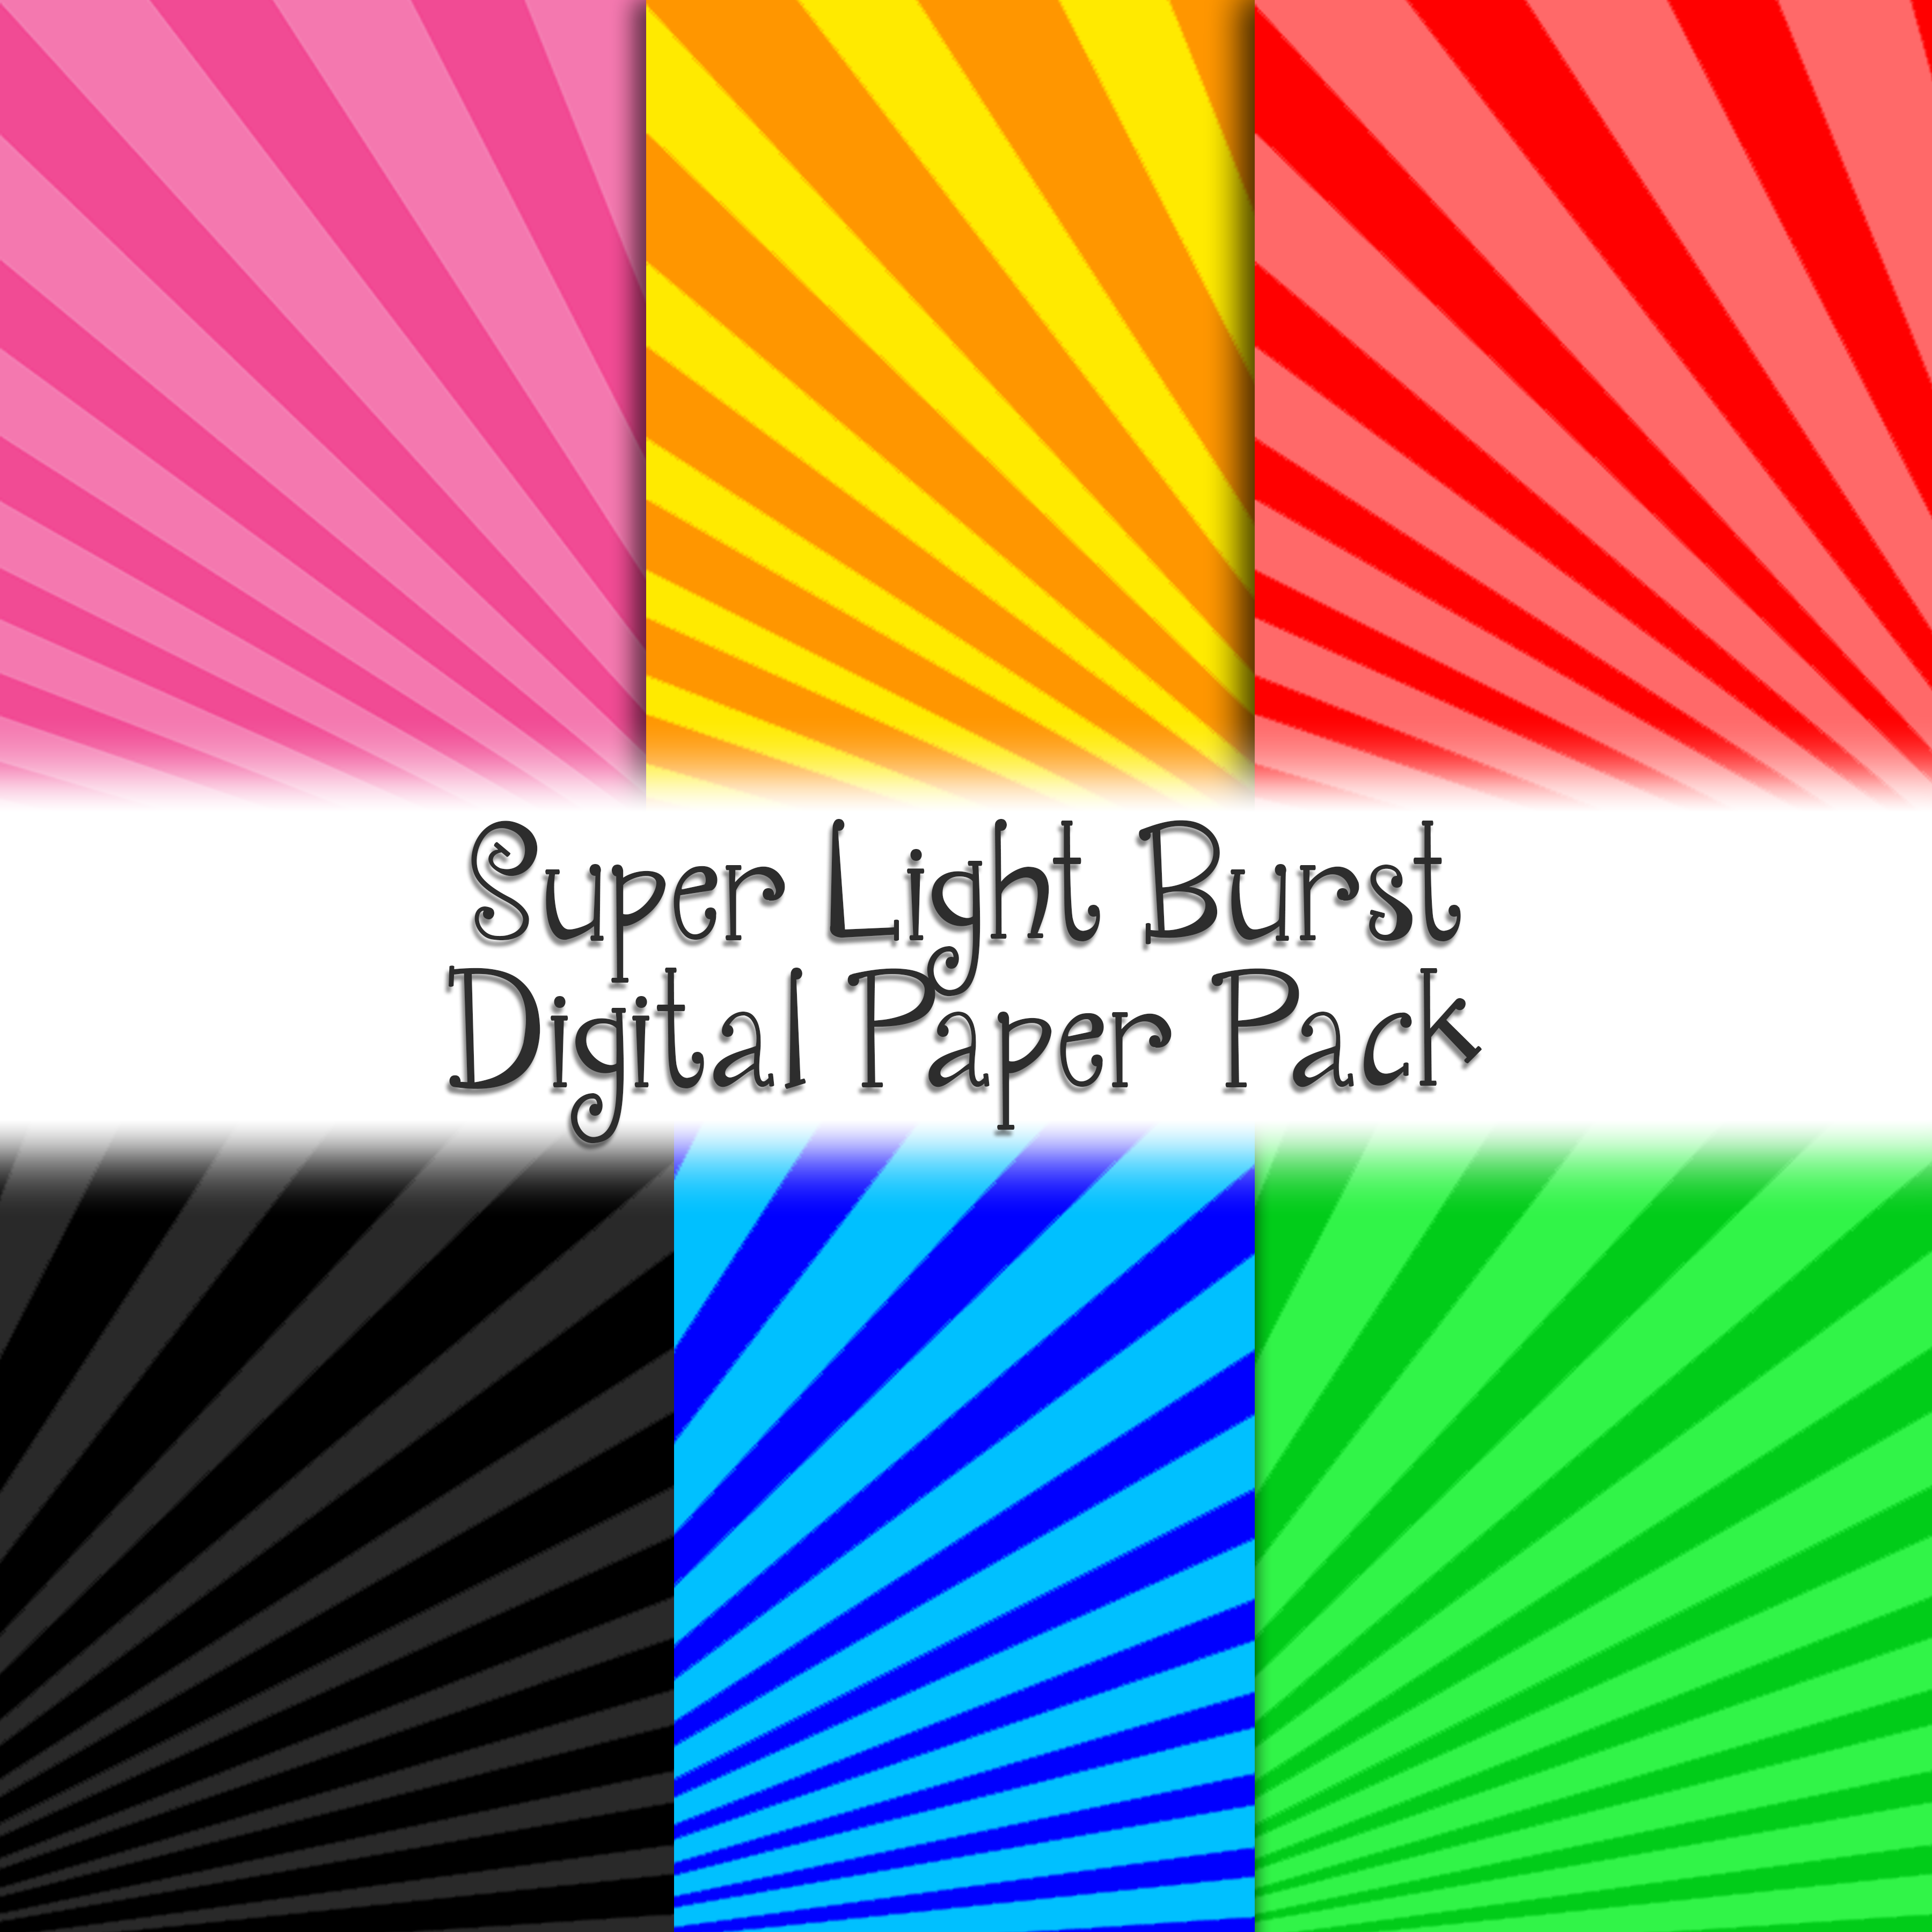 Super Light Burst Digital Paper Pack